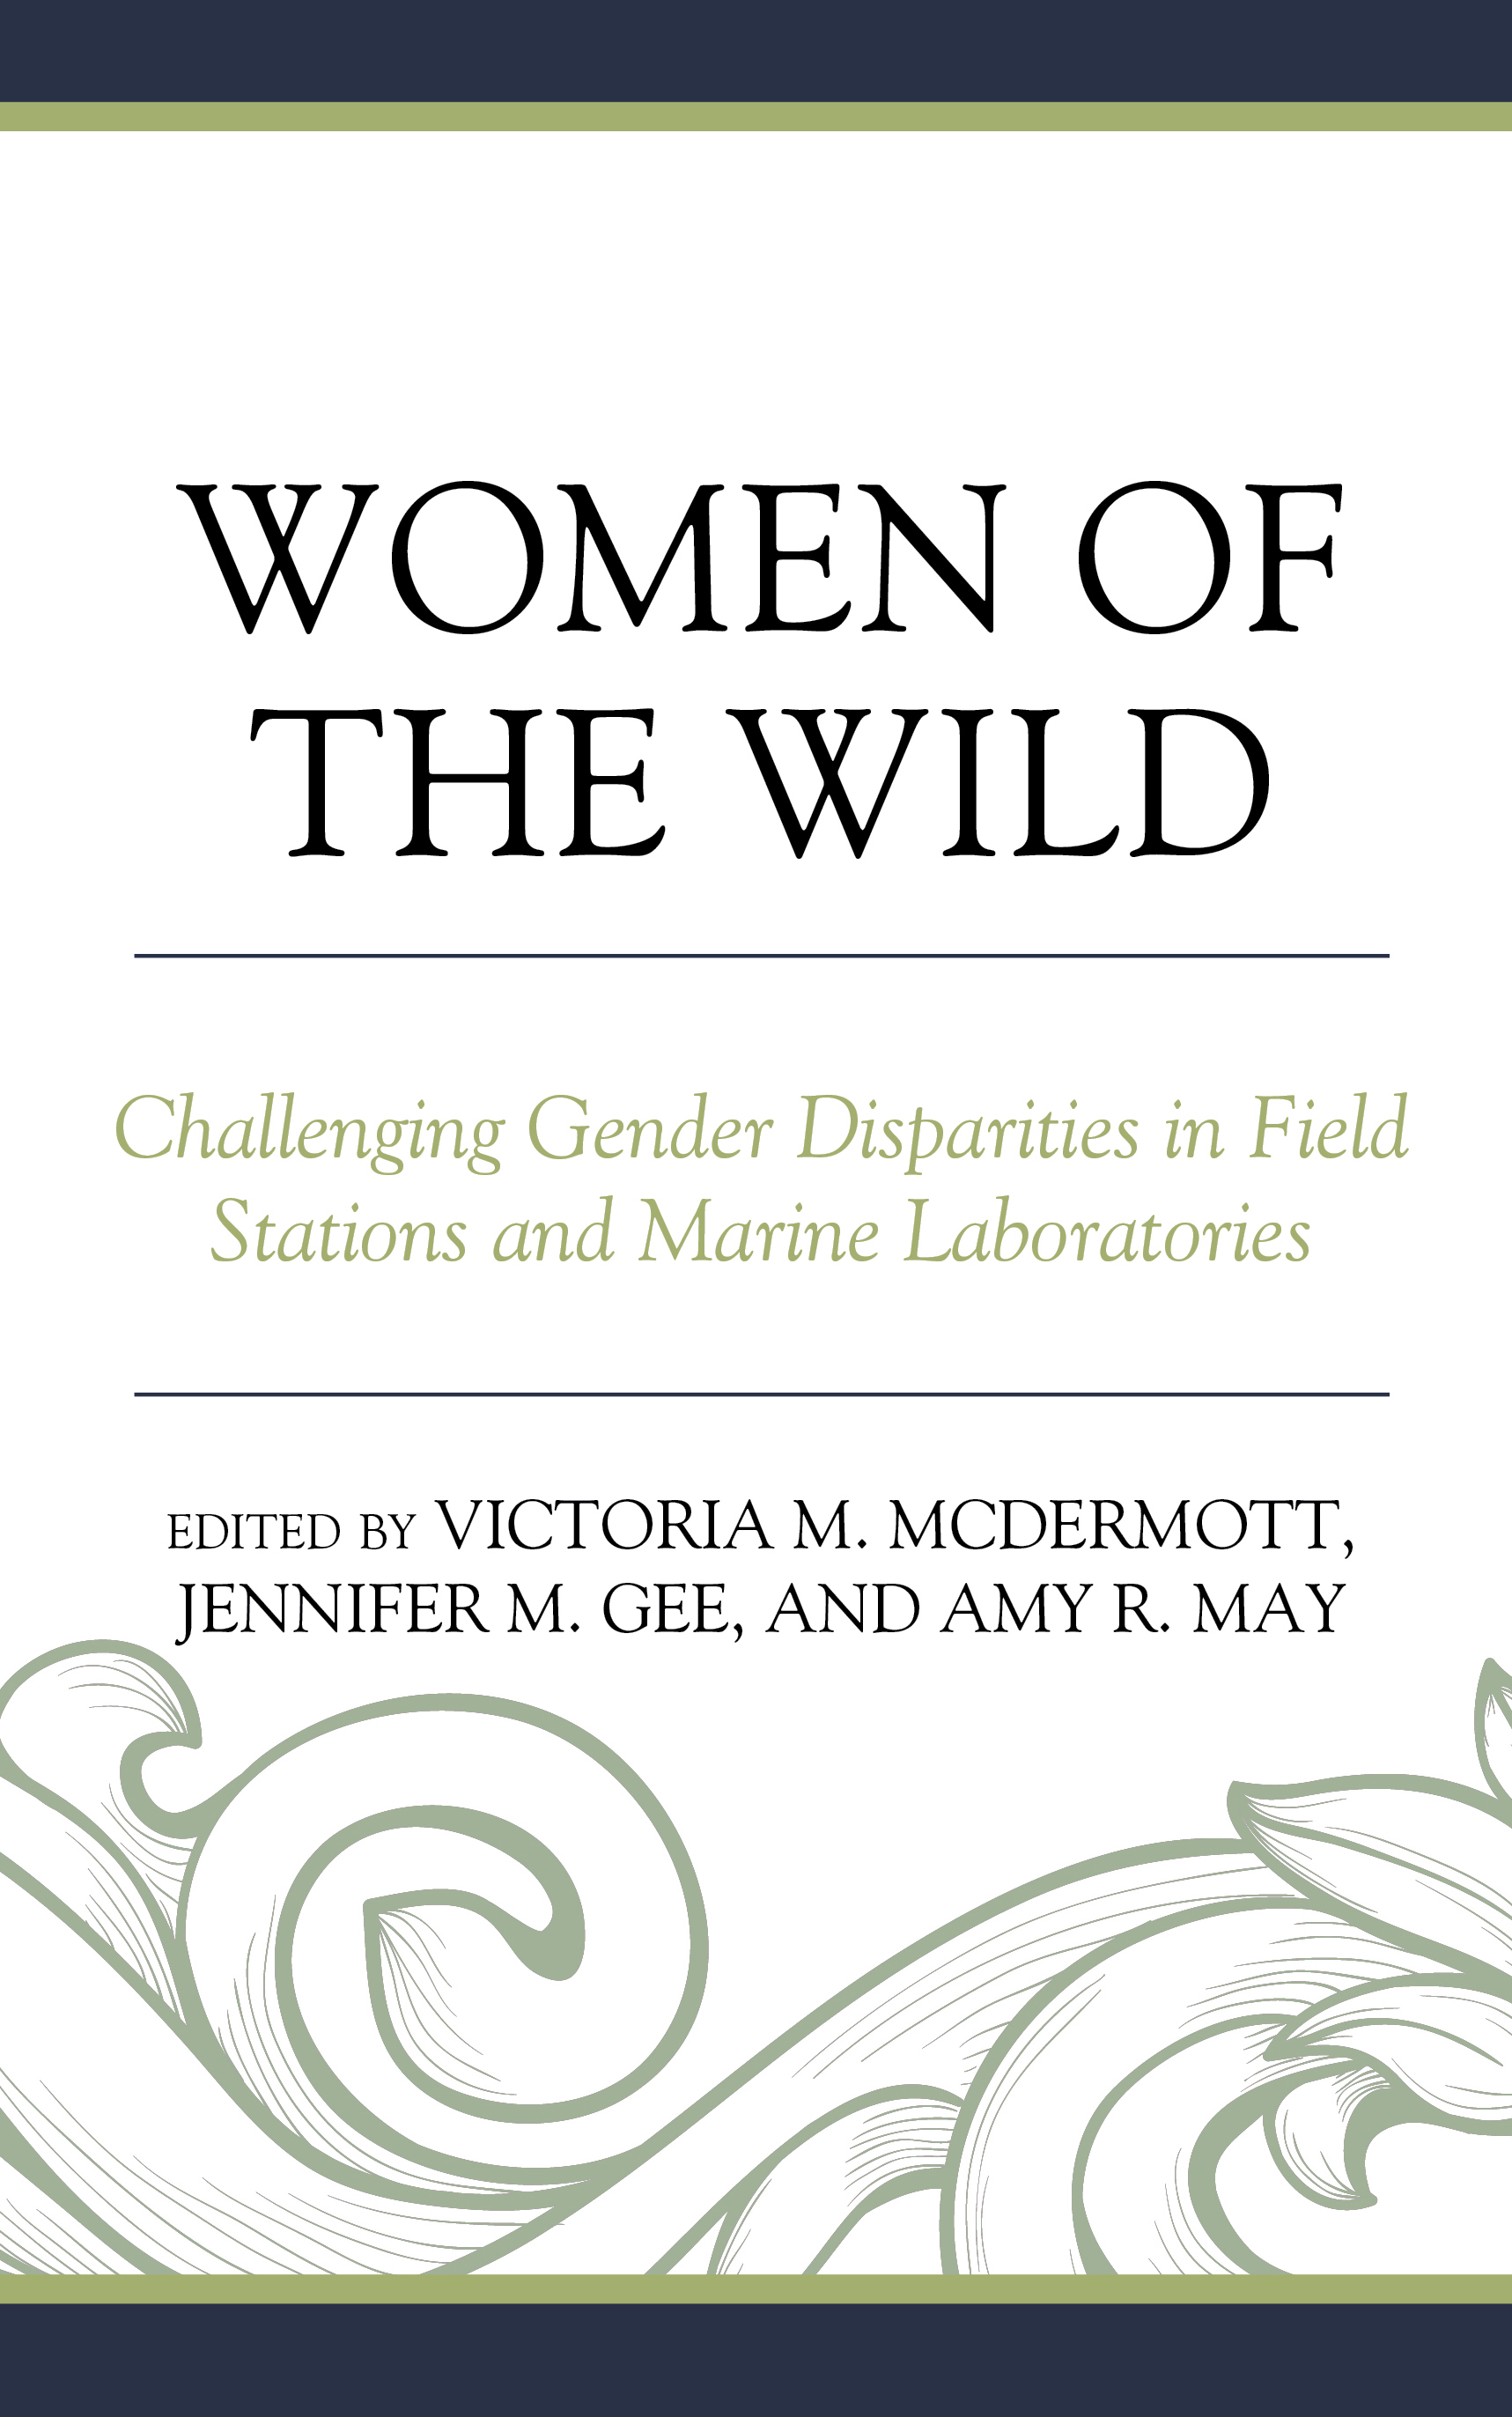 Women of the Wild: Challenging Gender Disparities in Field Stations and Marine Laboratories